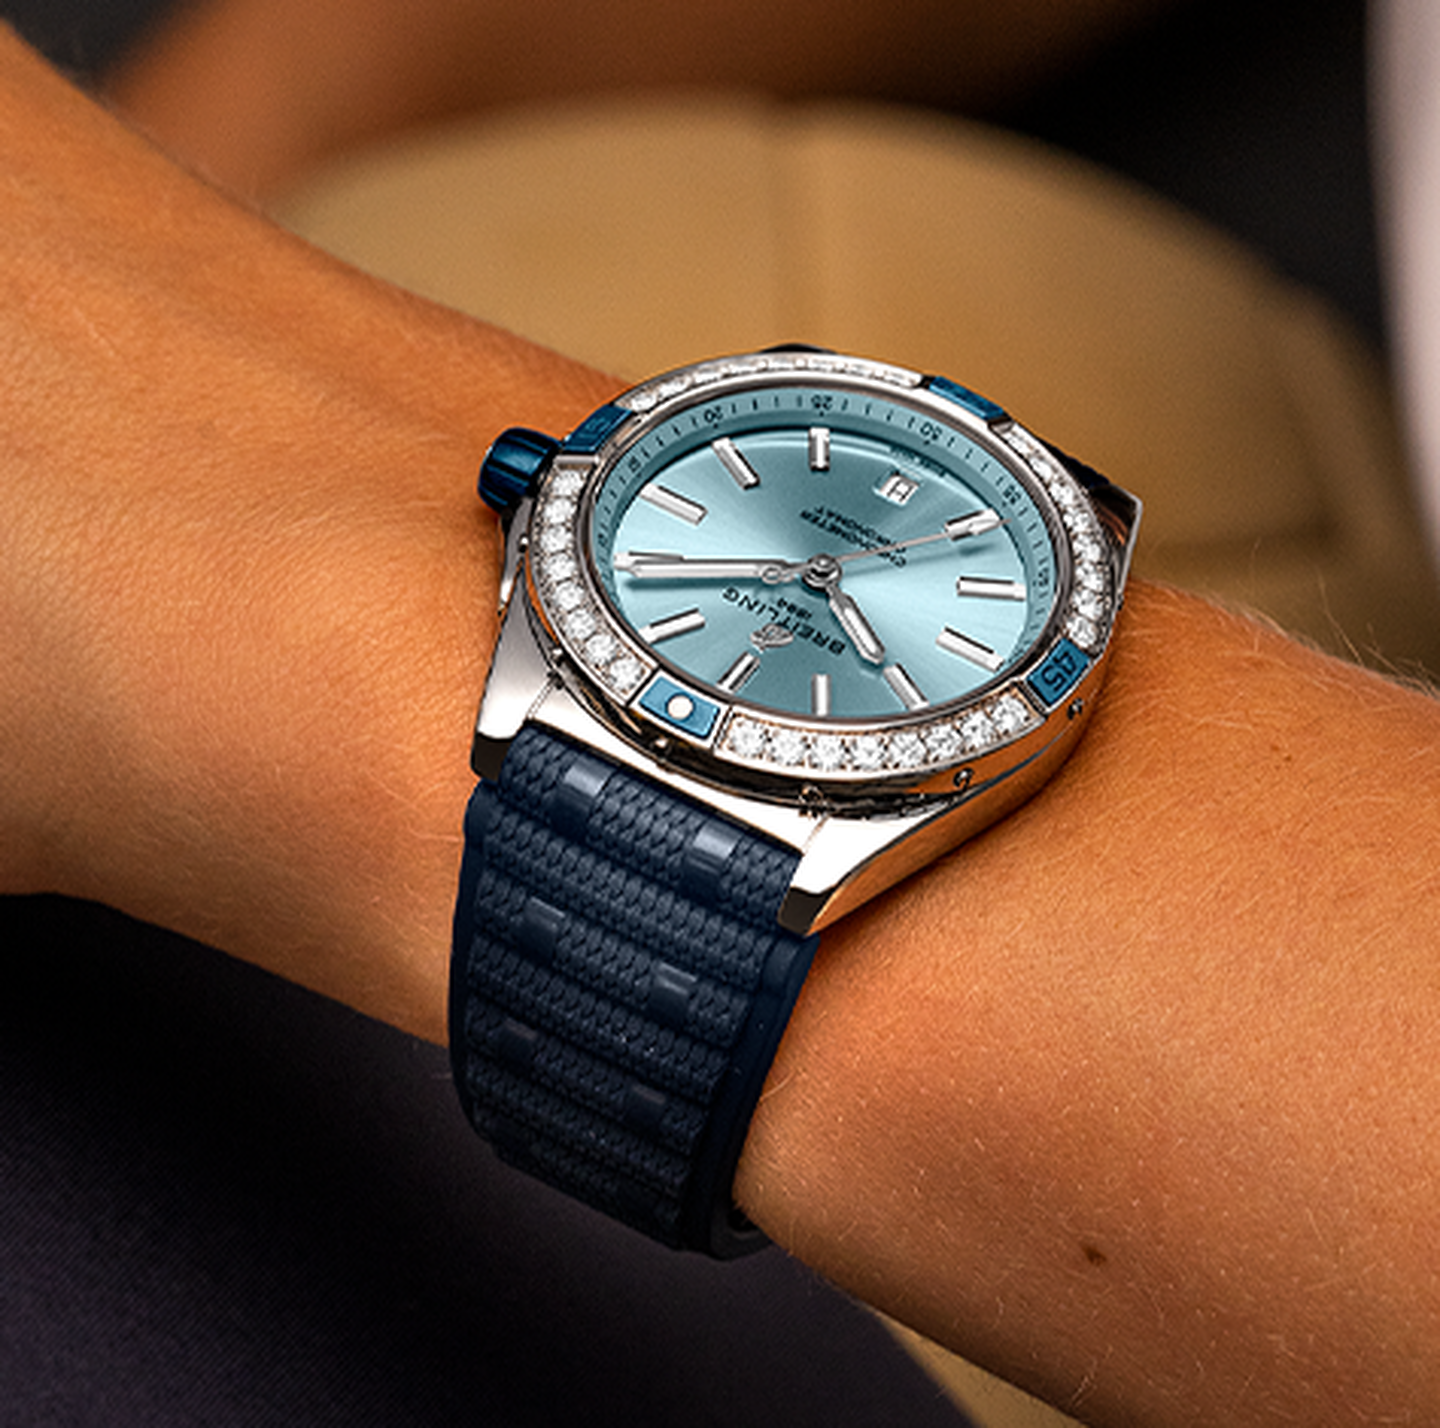 Breitling women's watch